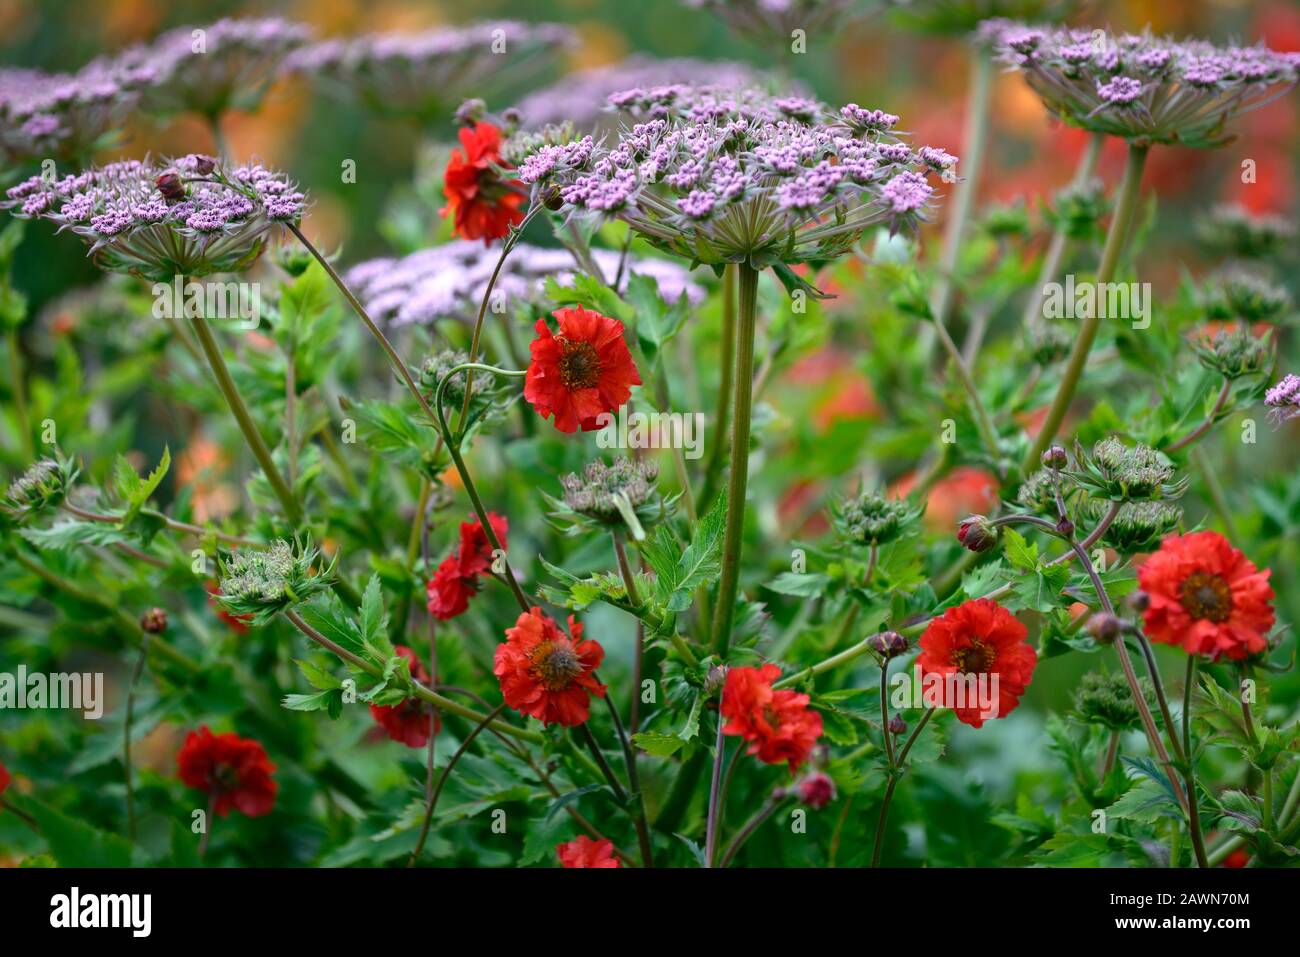 geum scarlet tempest,Melanoselinum decipiens,umbellifer,red flowers,flowering,mix,mixed planting scheme,garden,gardens,RM Floral Stock Photo